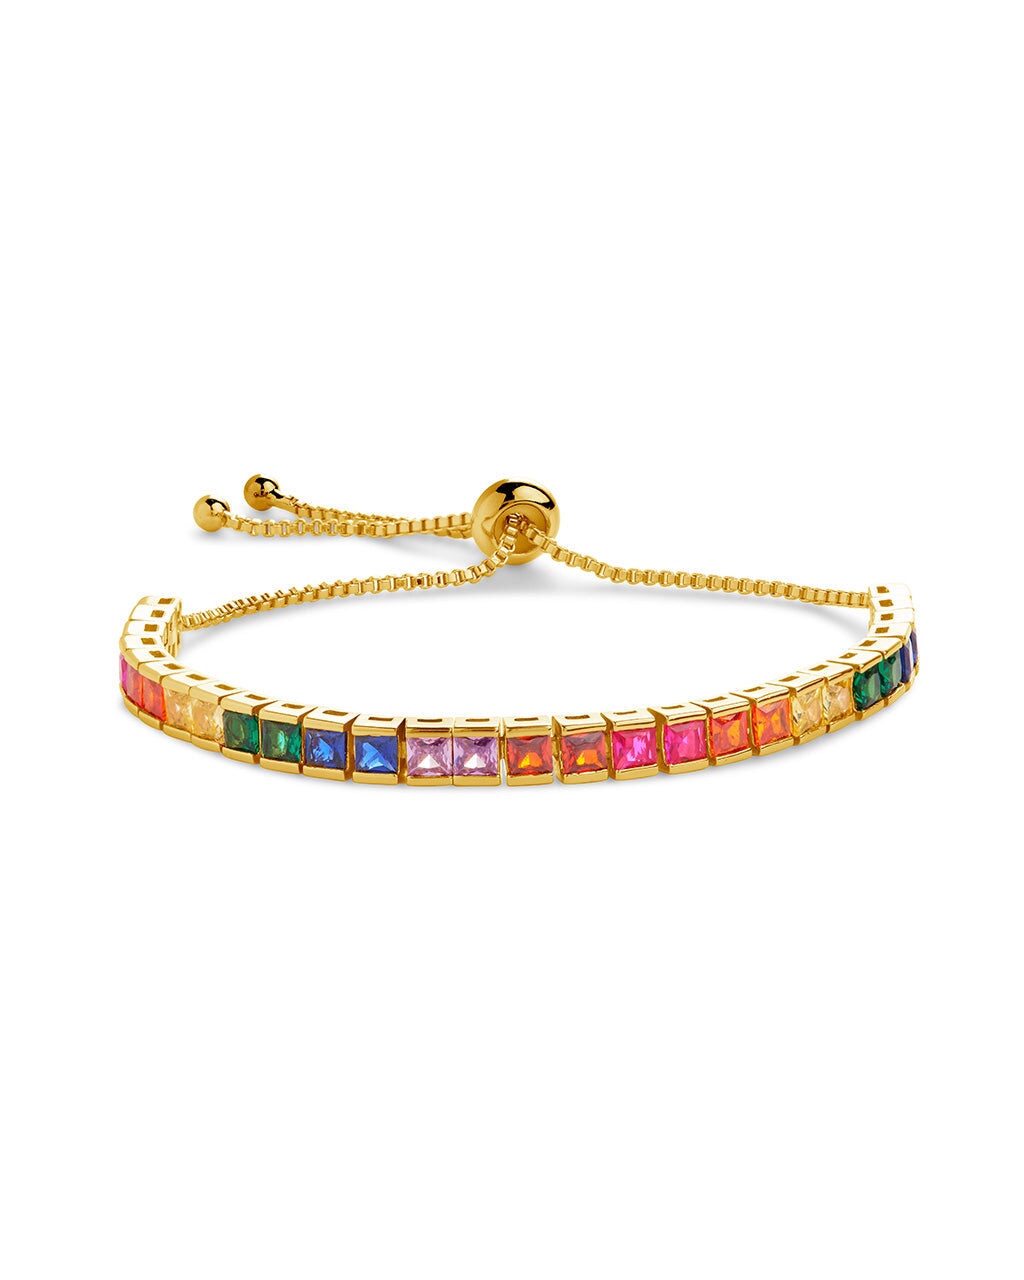 Rainbow Heart Cz Bracelet, Chain Link Bracelet, Carabiner Bracelet